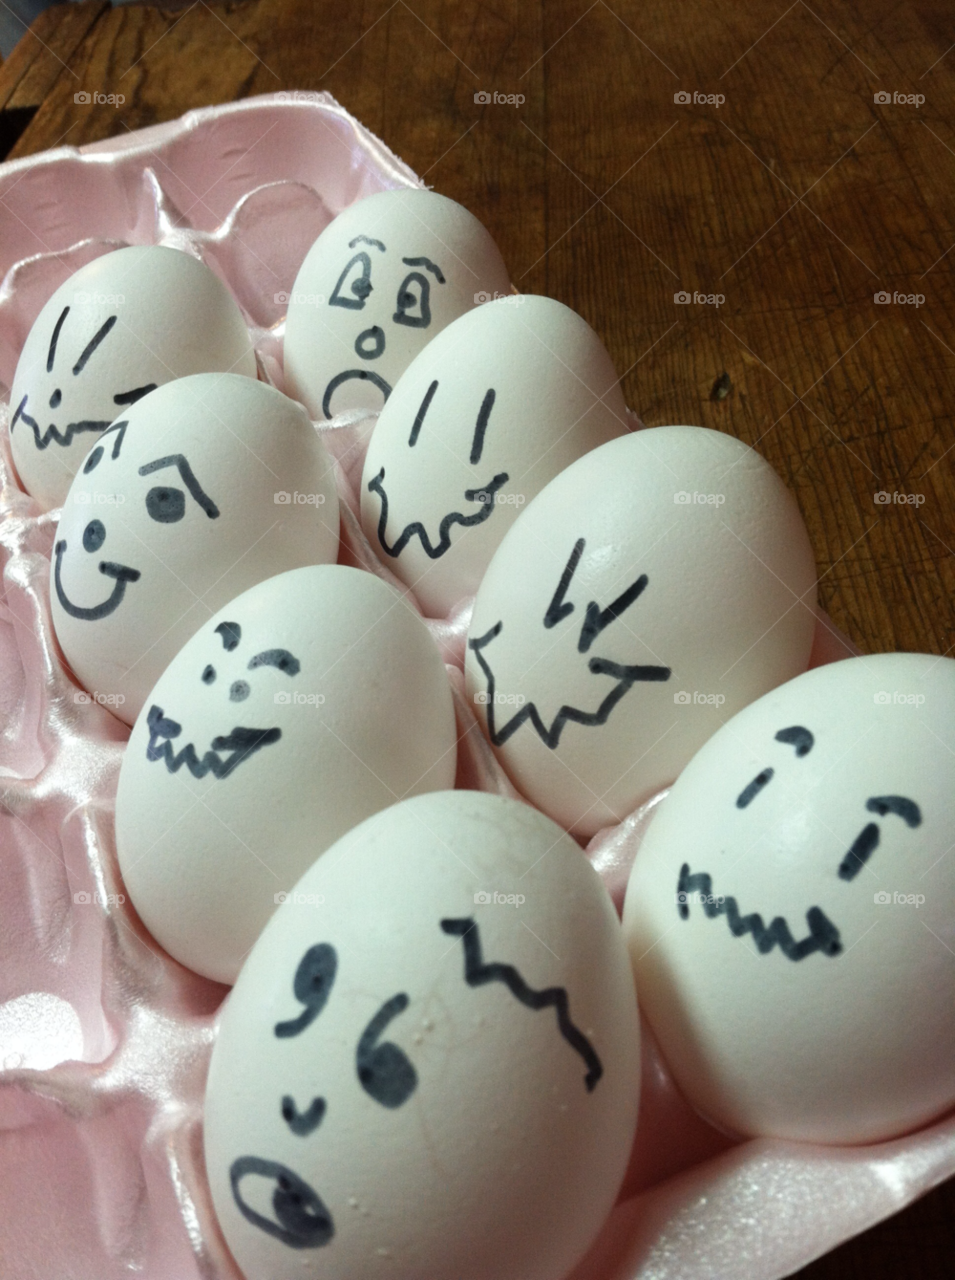 funny faces eggs egg by jasonoleham